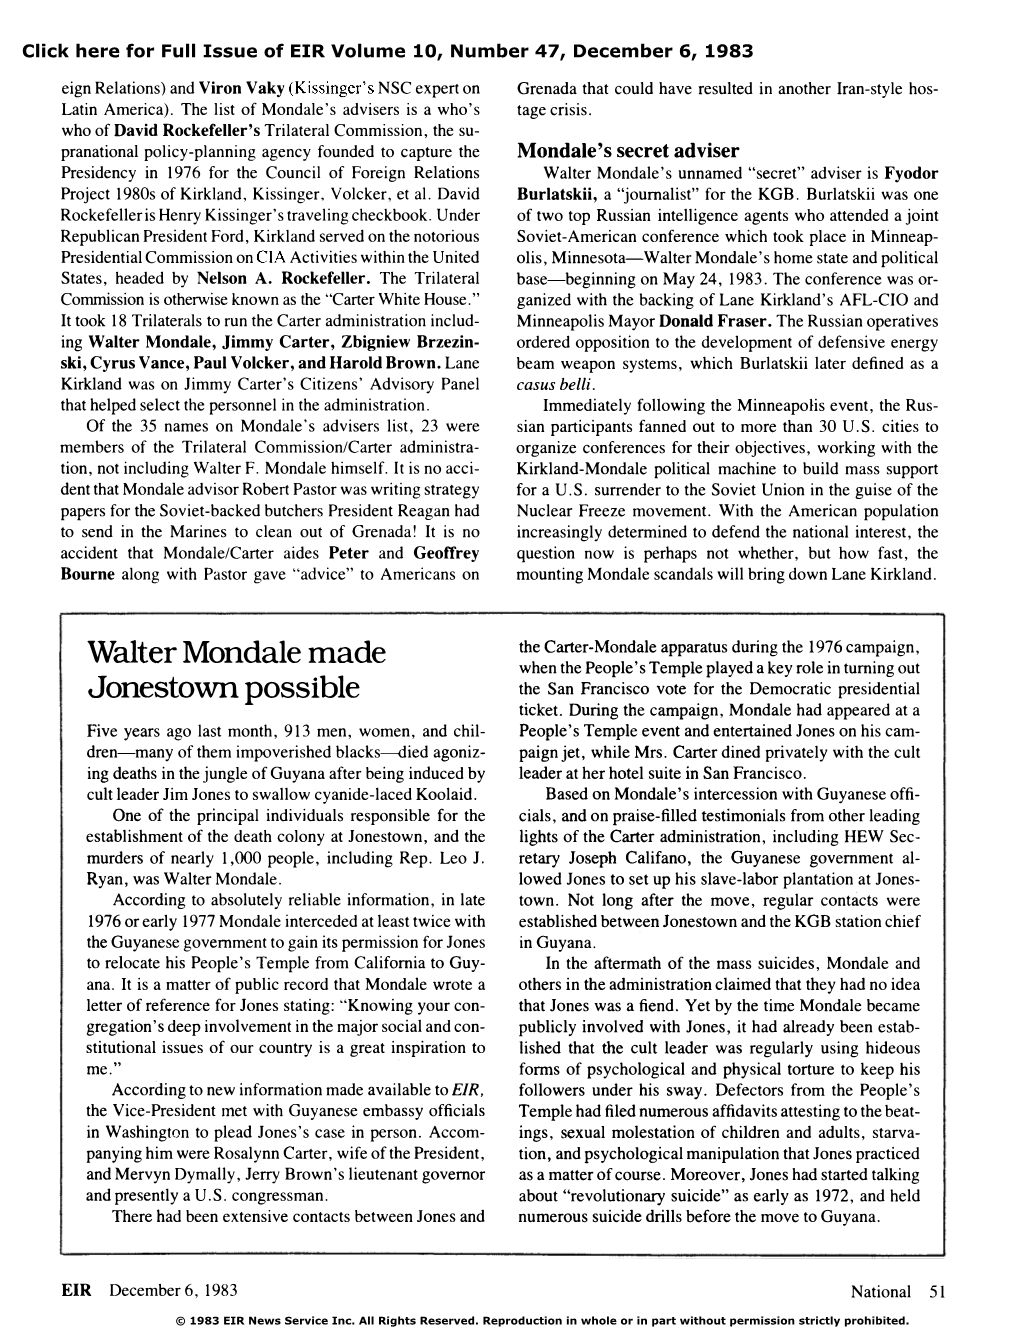 Walter Mondale Made Jonestown Possible